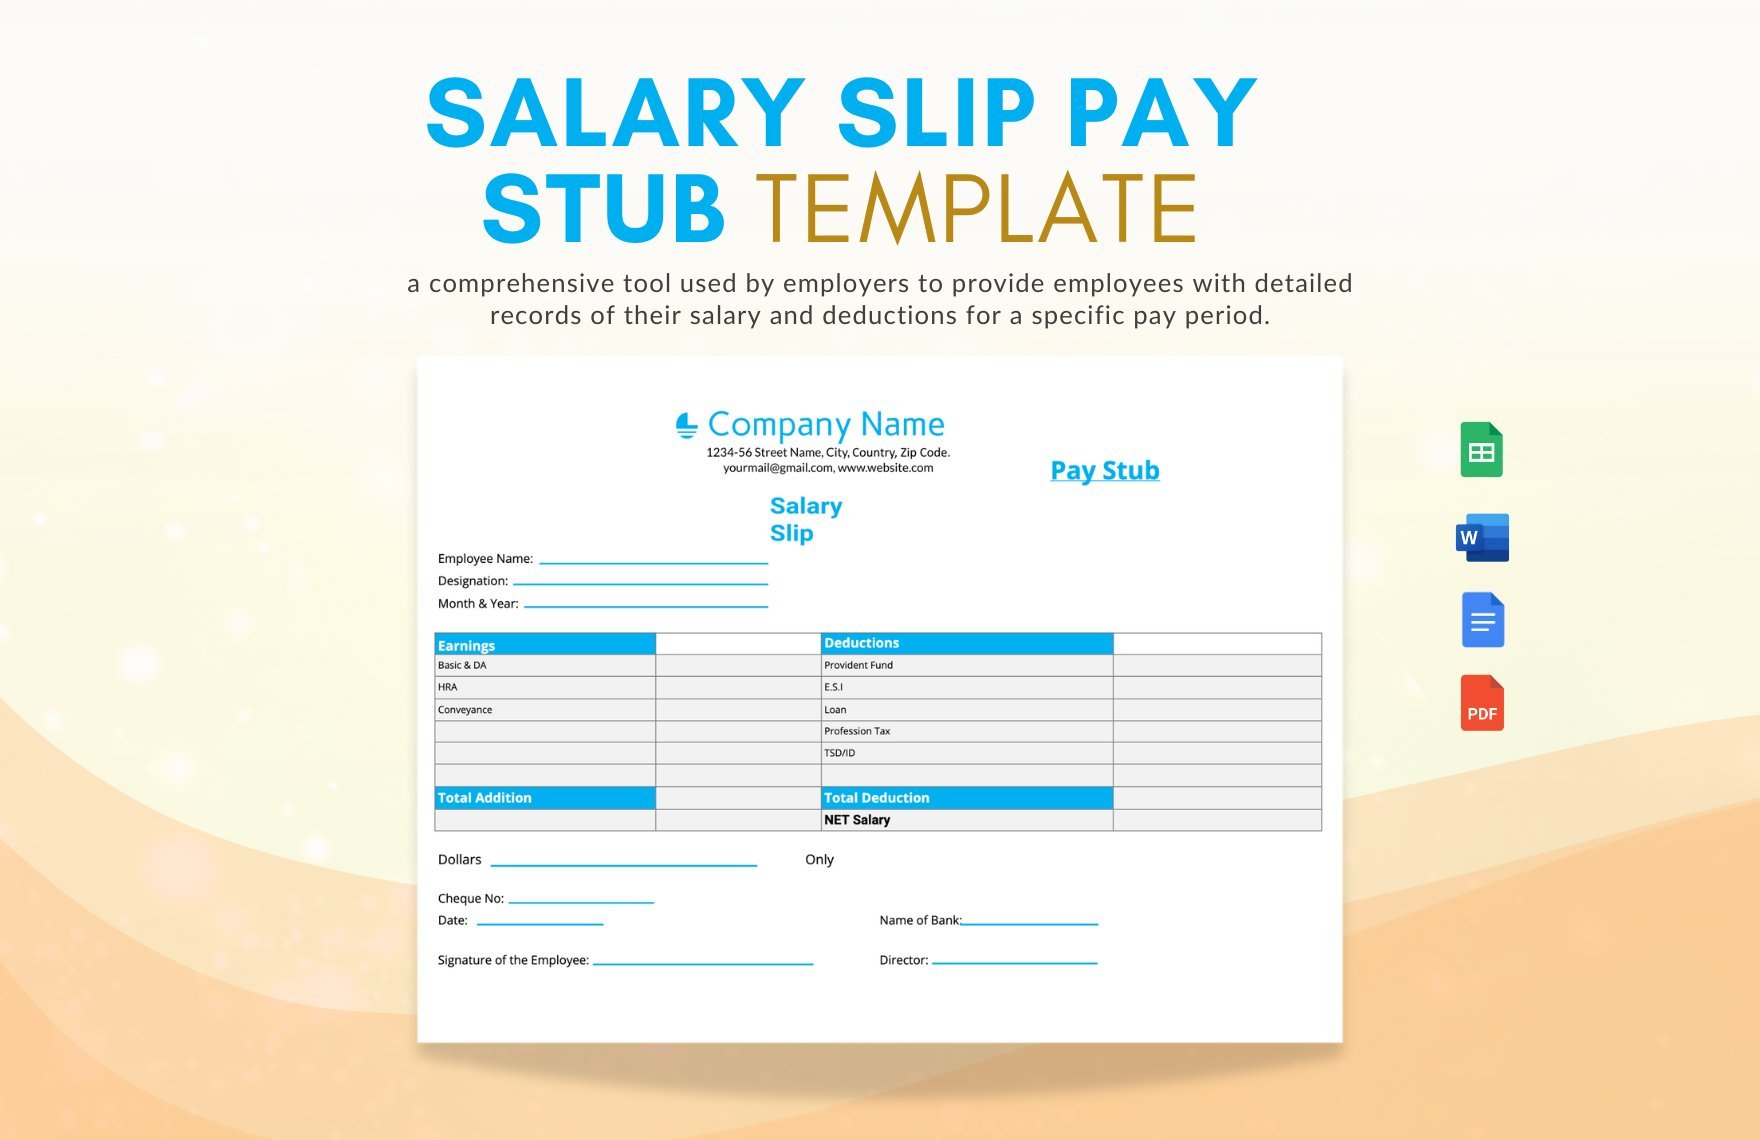 Salary Slip Pay Stub Template in Word, Google Docs, PDF, Google Sheets